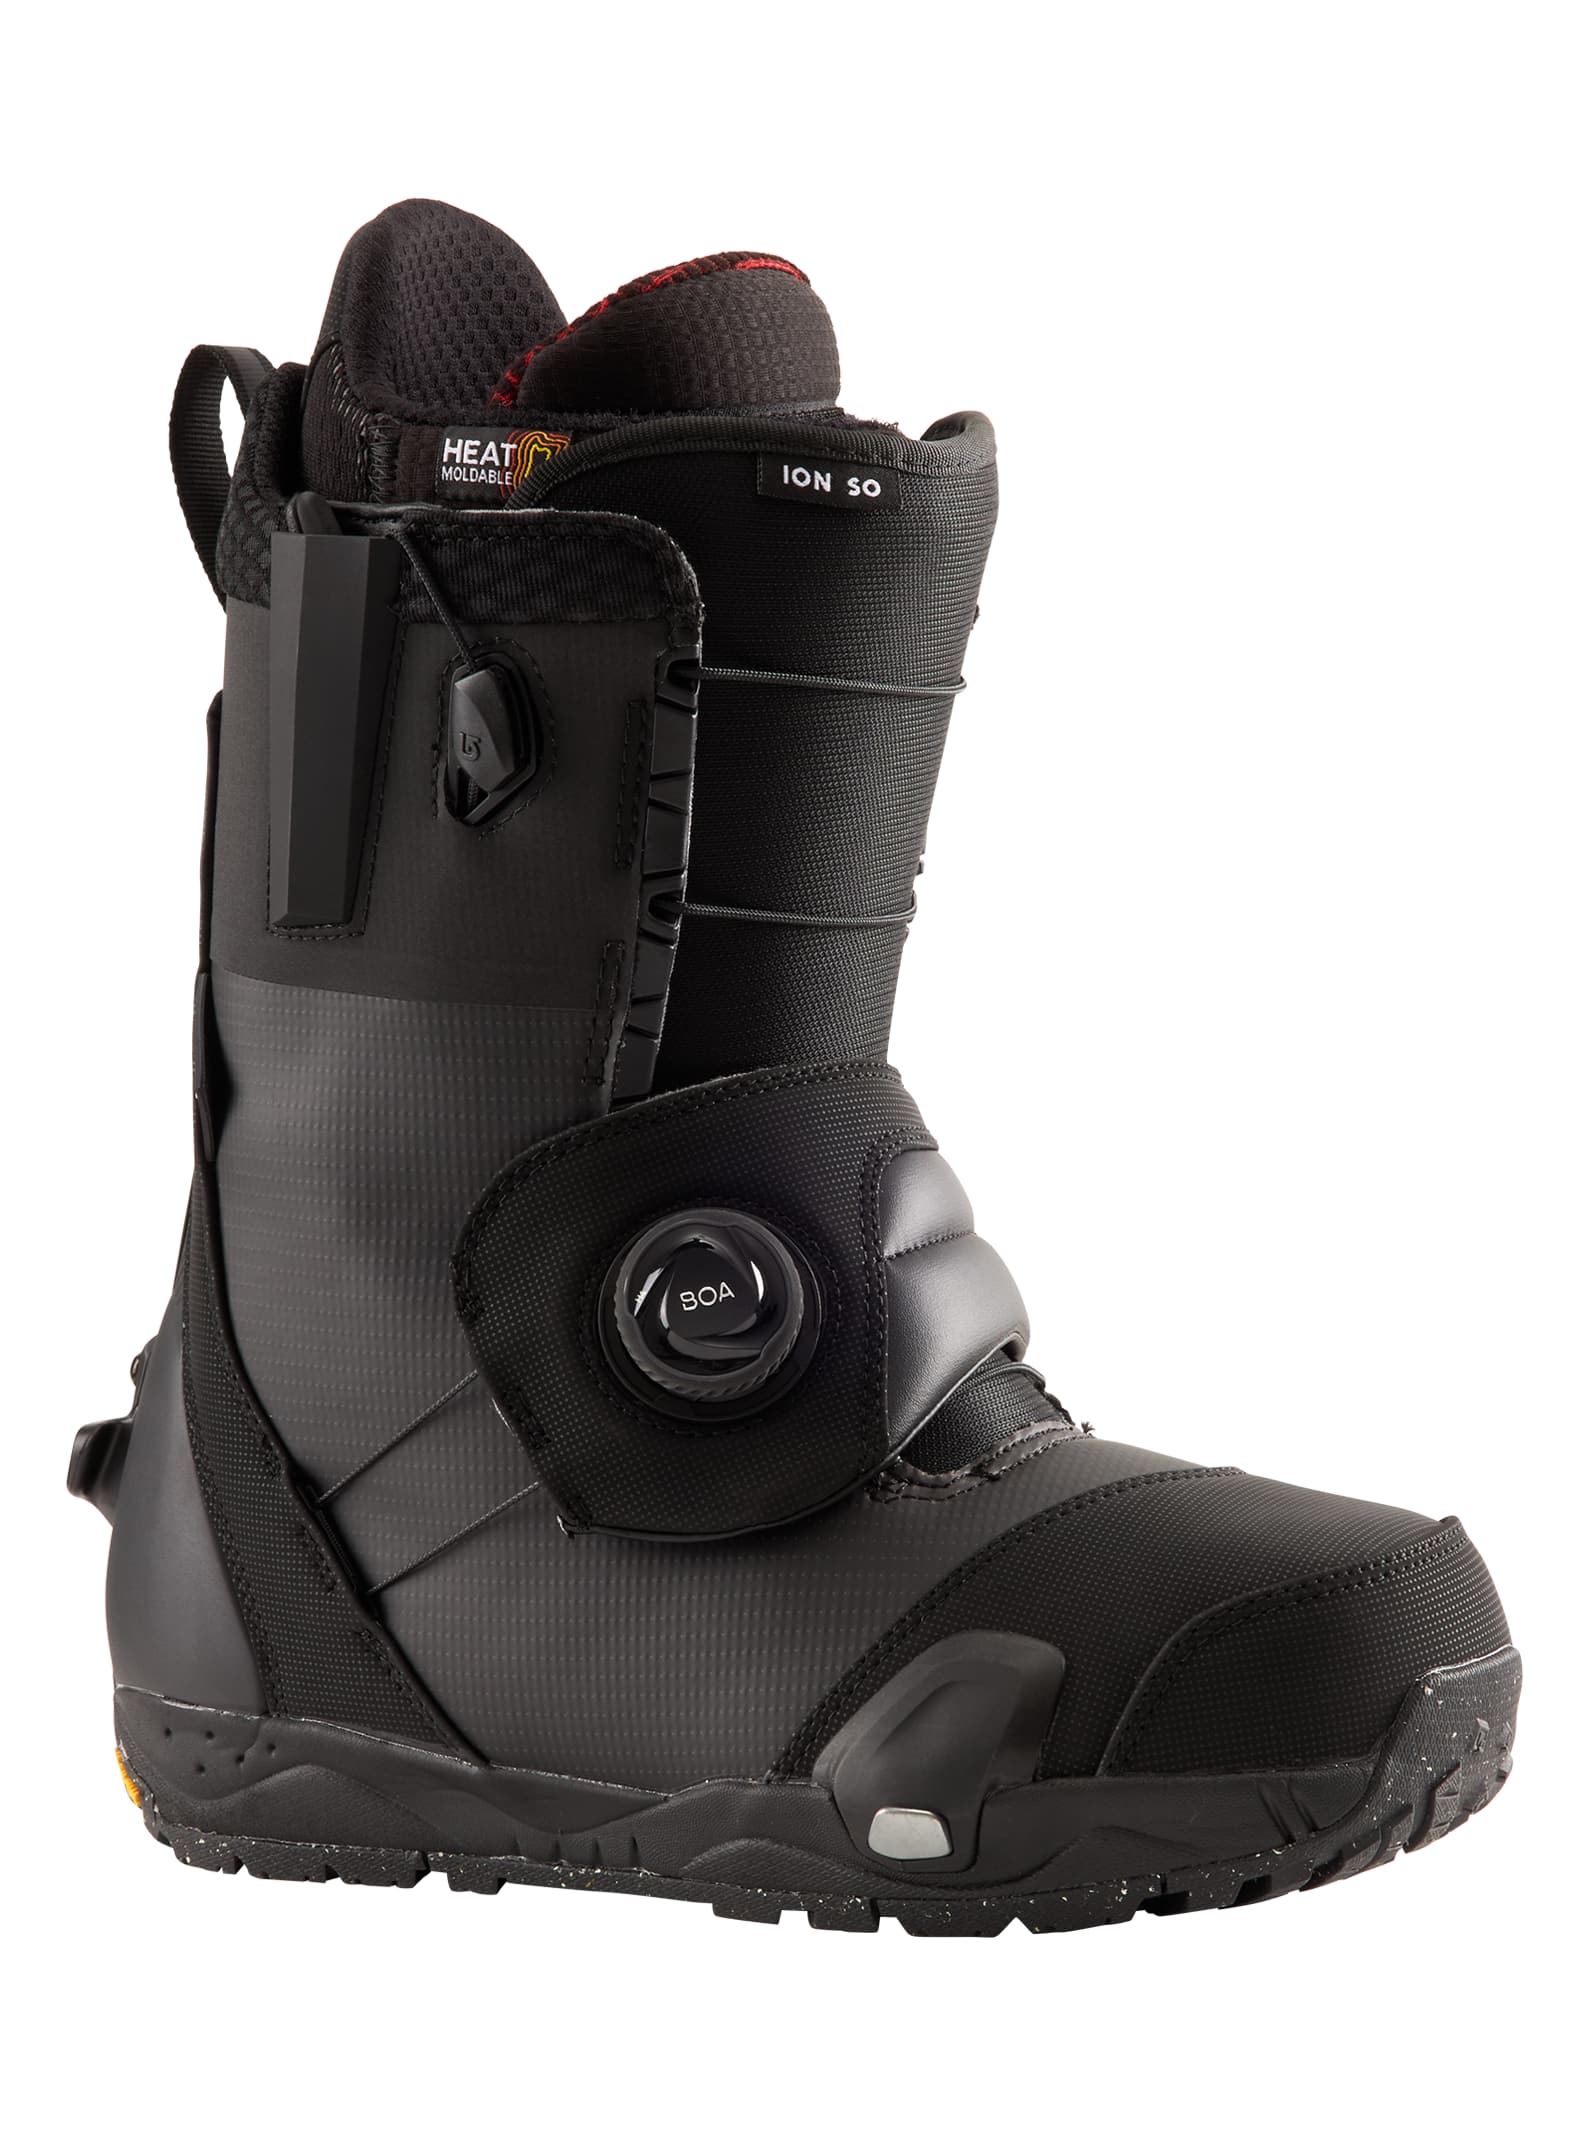 Burton - Boots de snowboard Ion Step On® homme, Black, 10